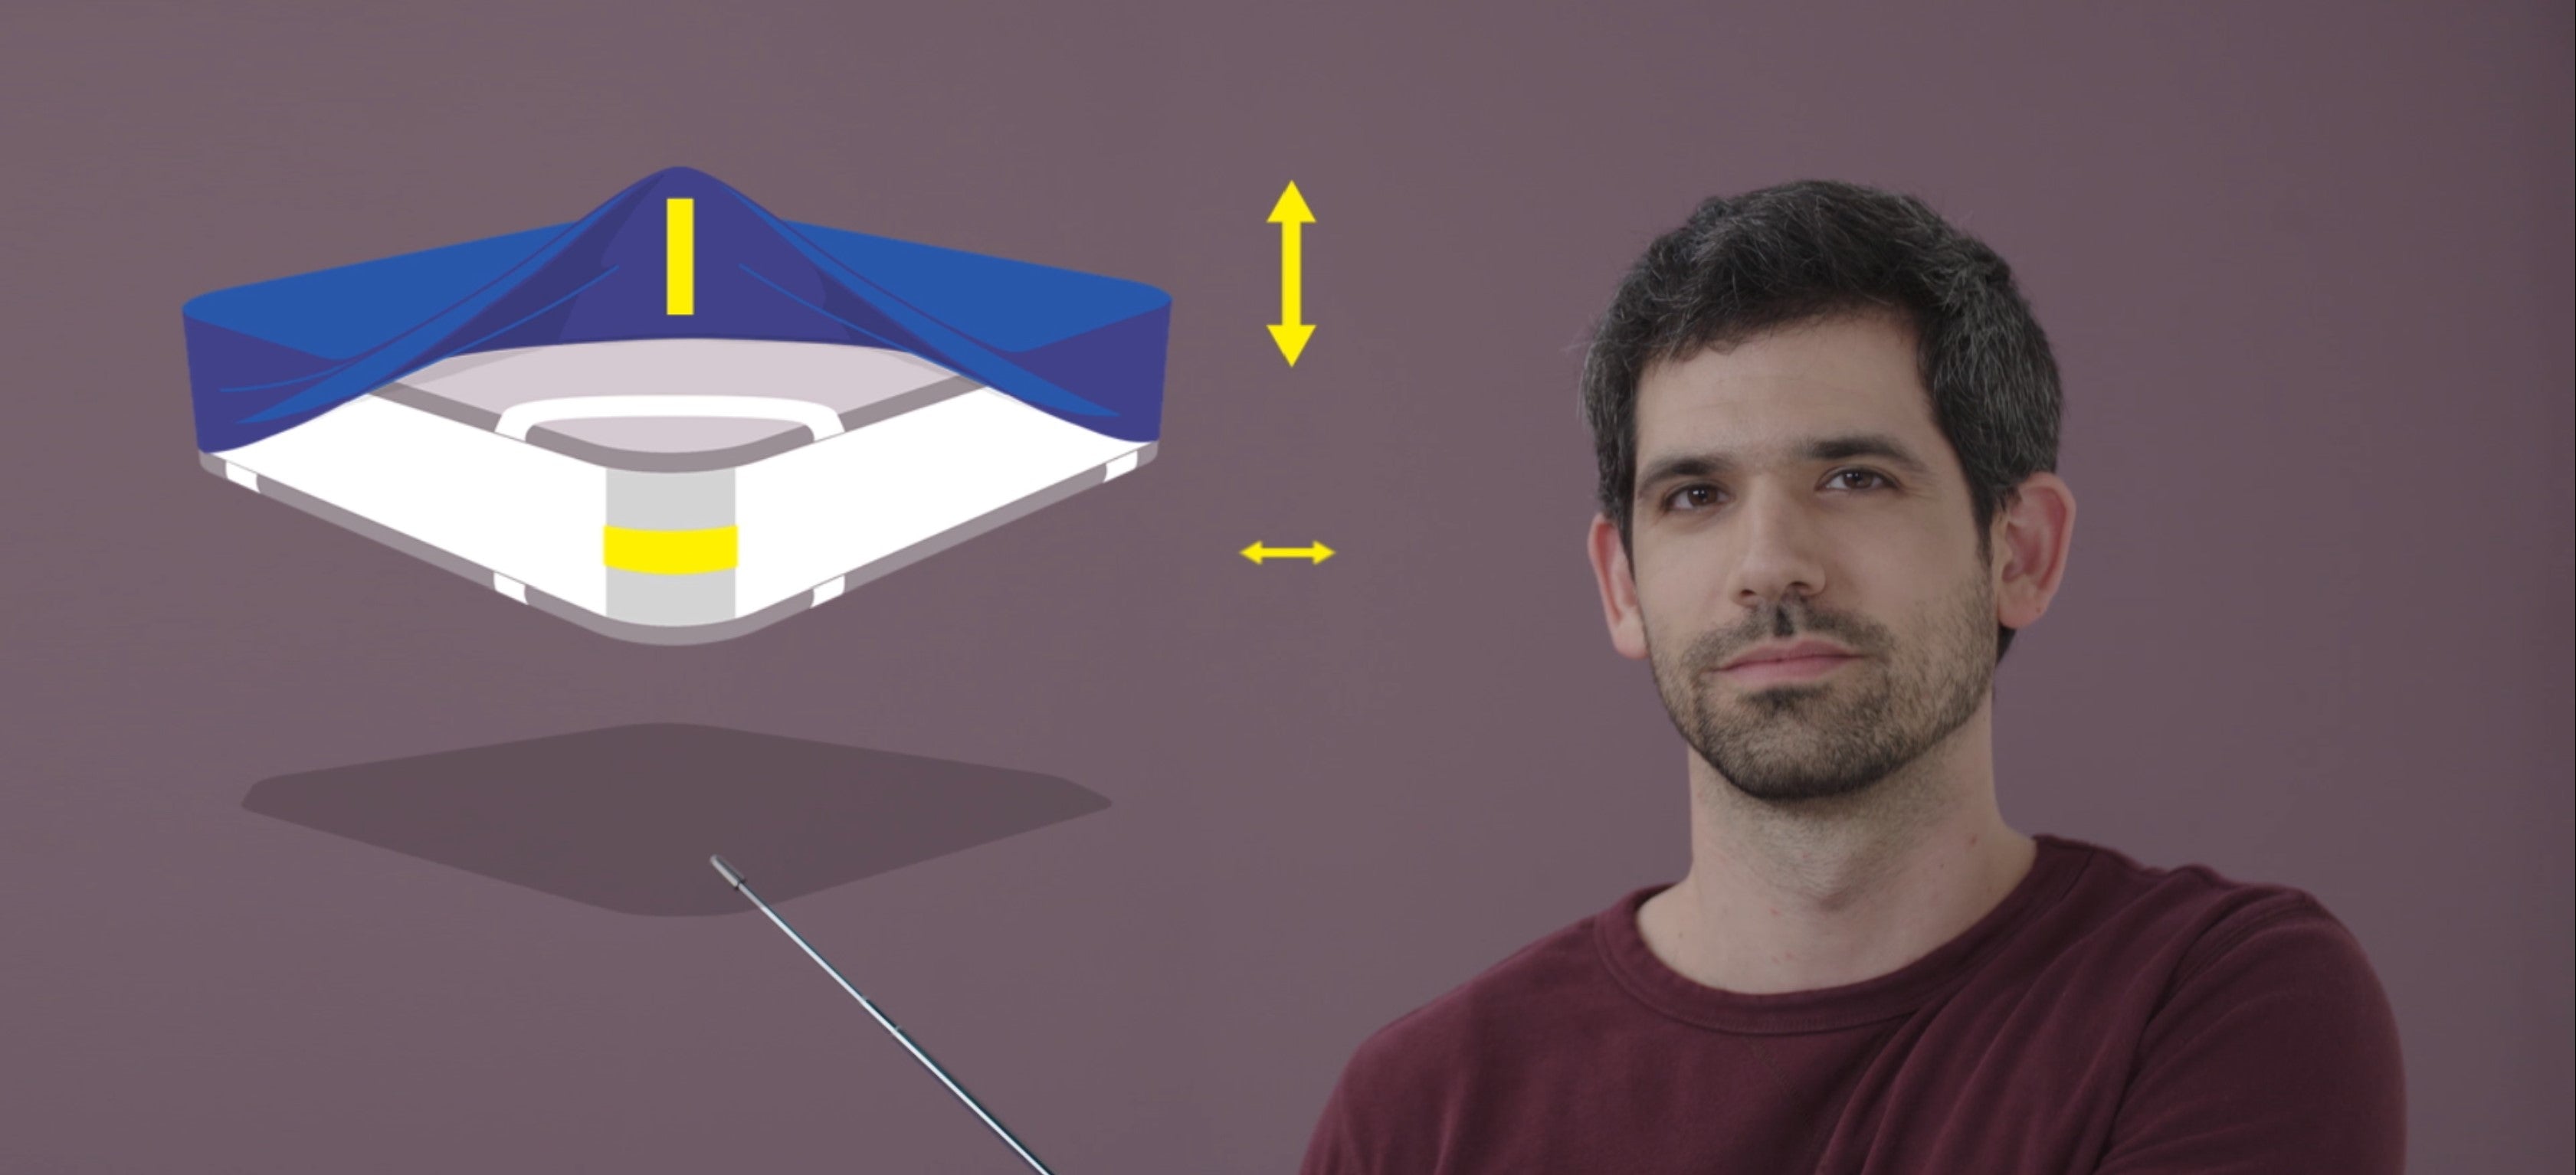 Jonatahn is presenting Beddingo Sheets patent on a mattress diagram